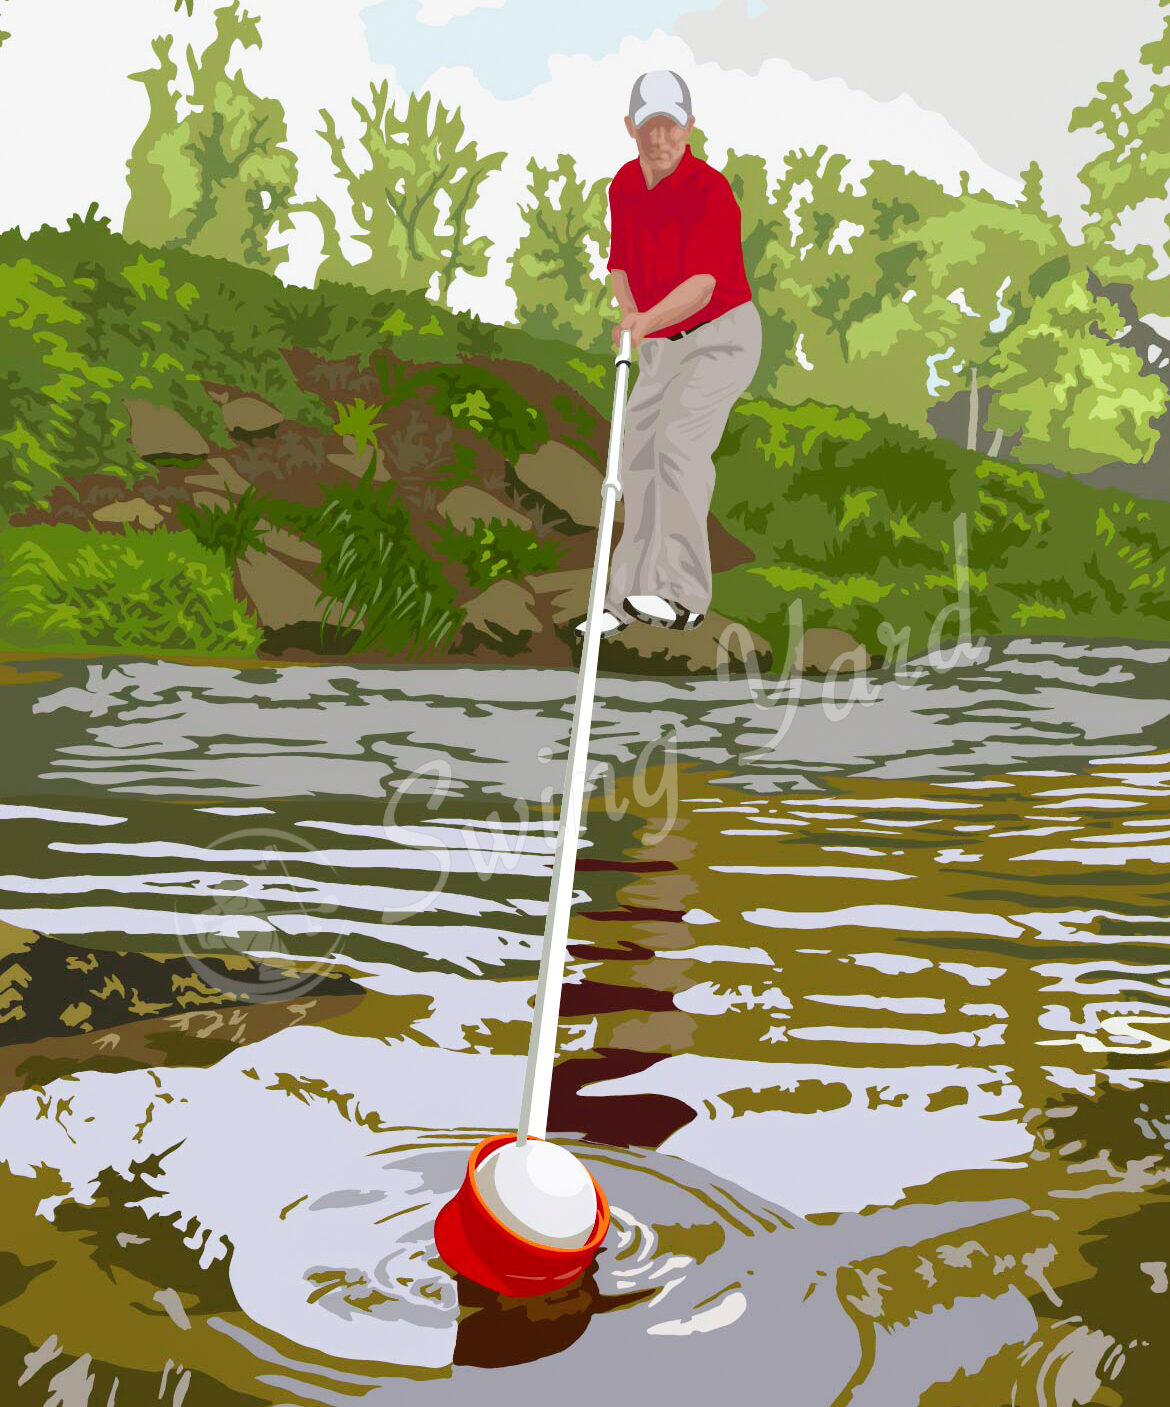 A guy retrieving a golf ball from a creek